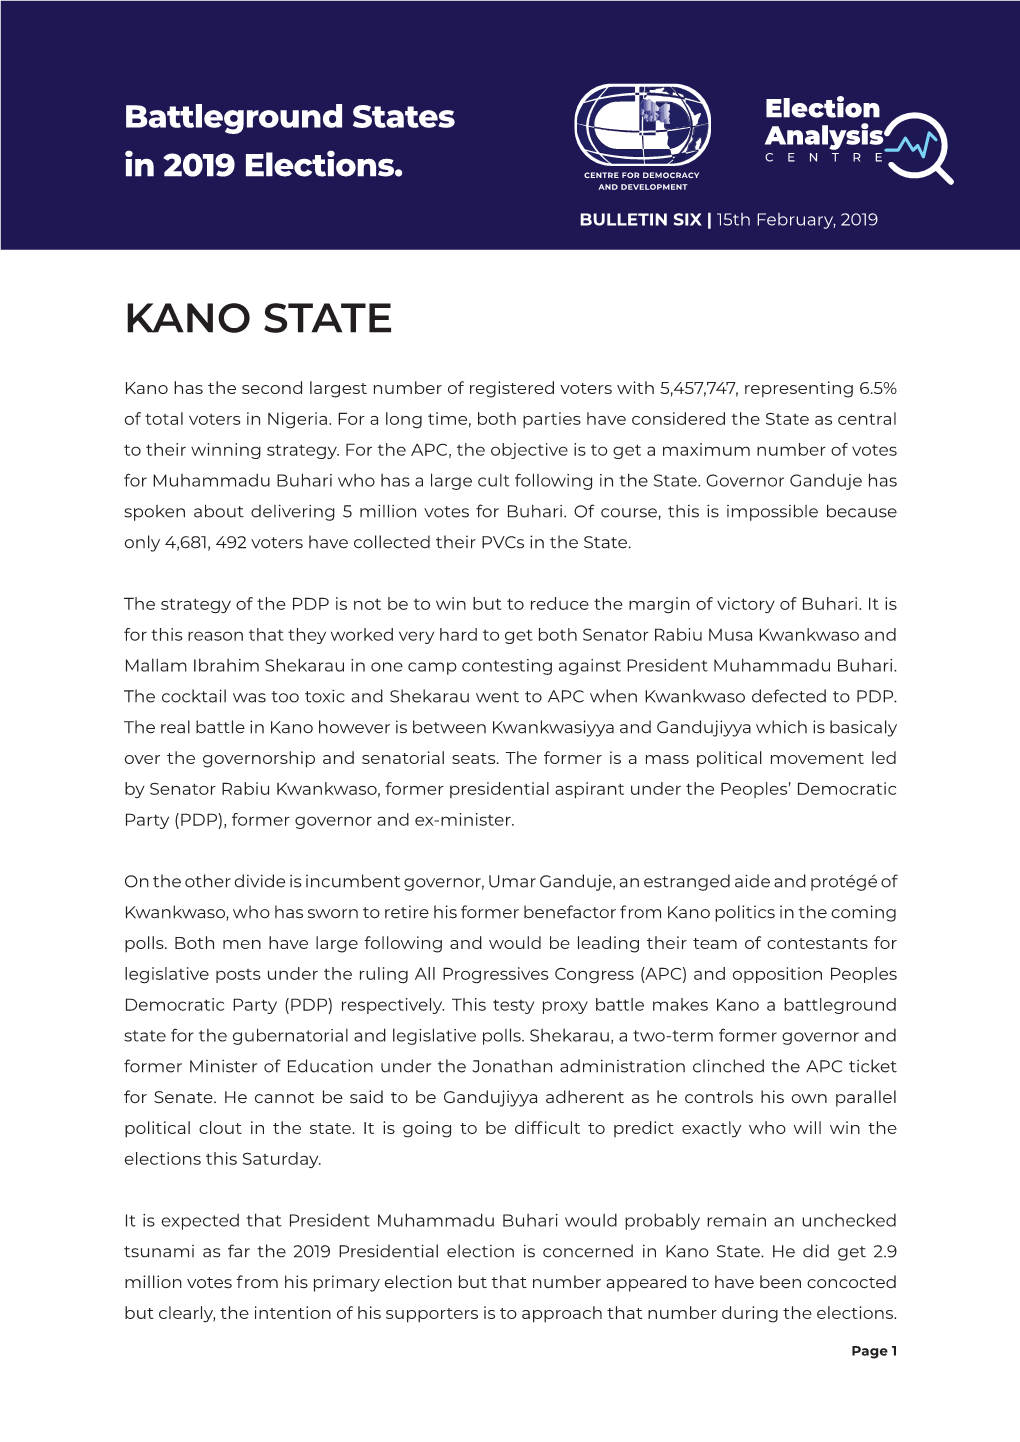 Battleground States in 2019 Elections (Kano State)